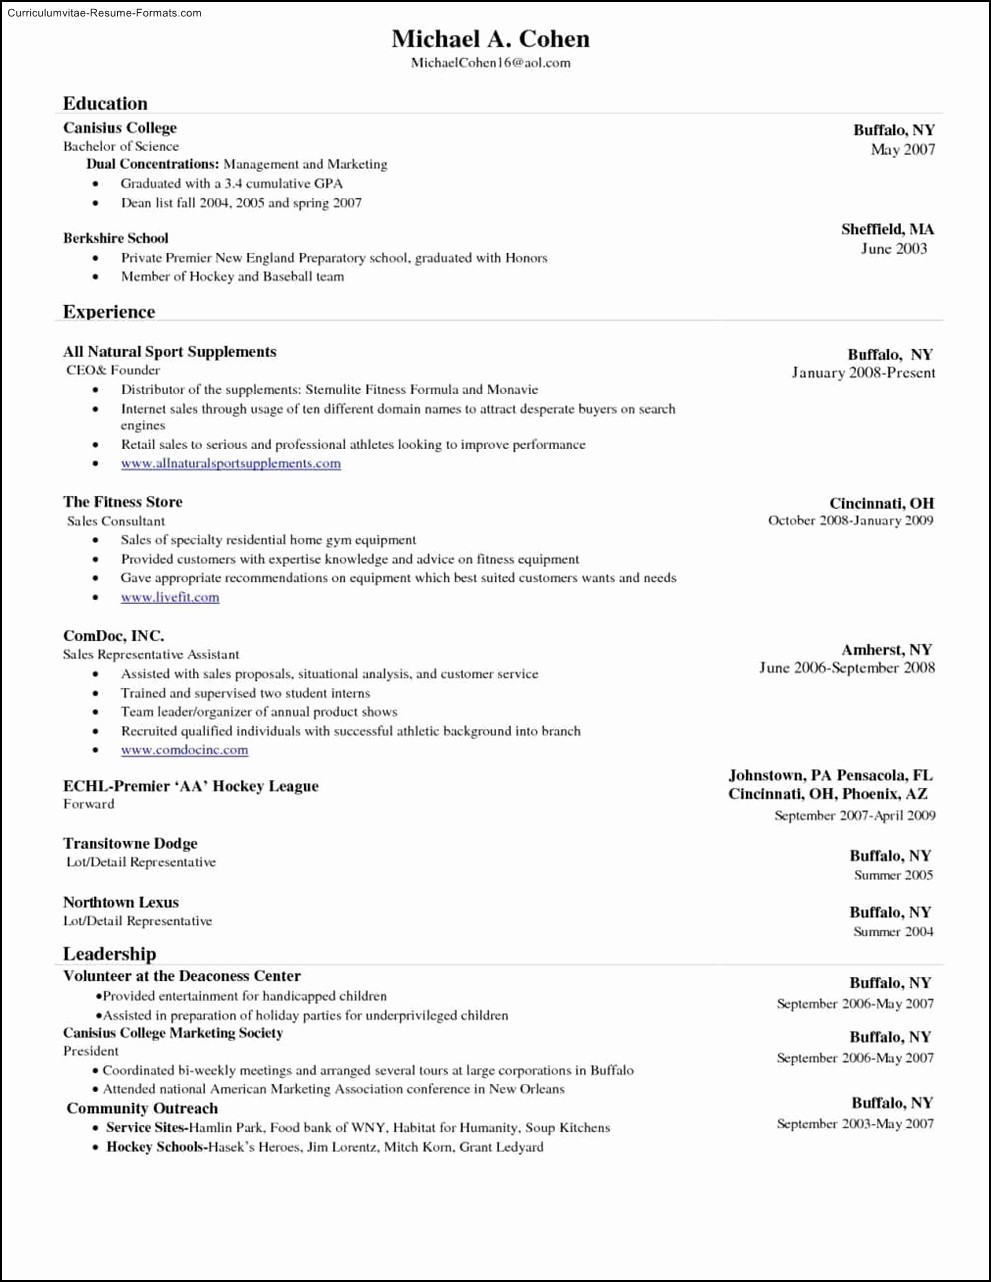 Microsoft Office Online Resume Template Fresh Microsoft Word 2010 Resume Template Download Free